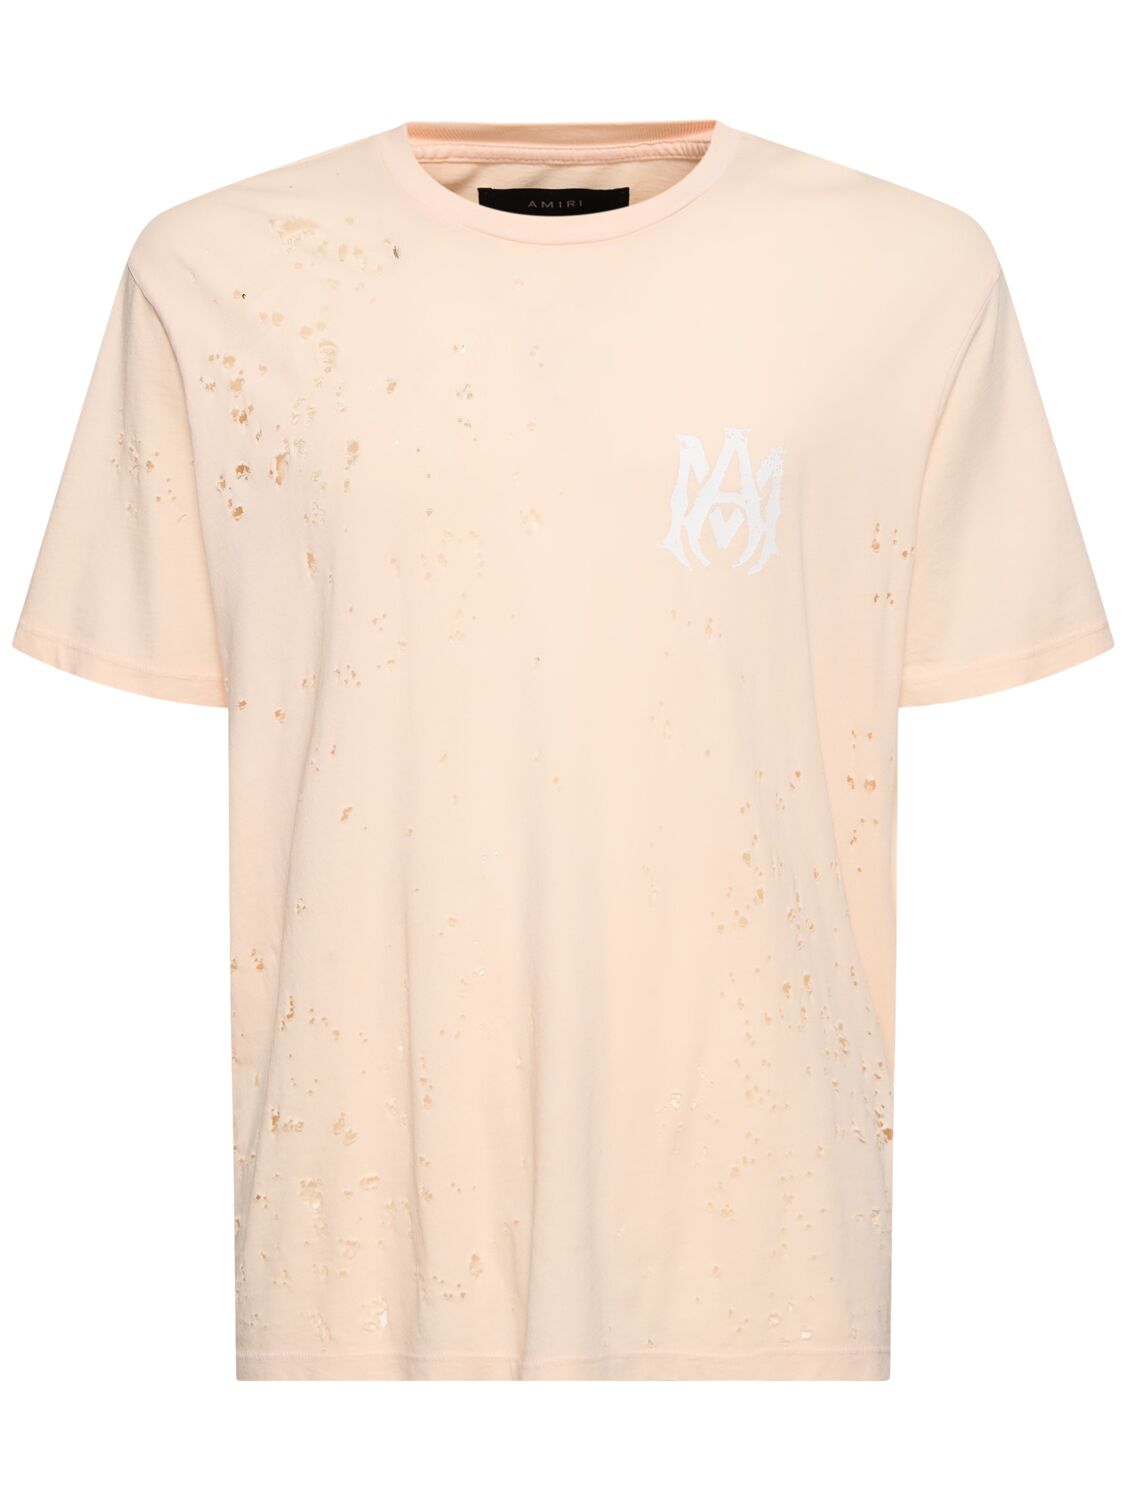 Image of Ma Logo Distressed Cotton Jersey T-shirt